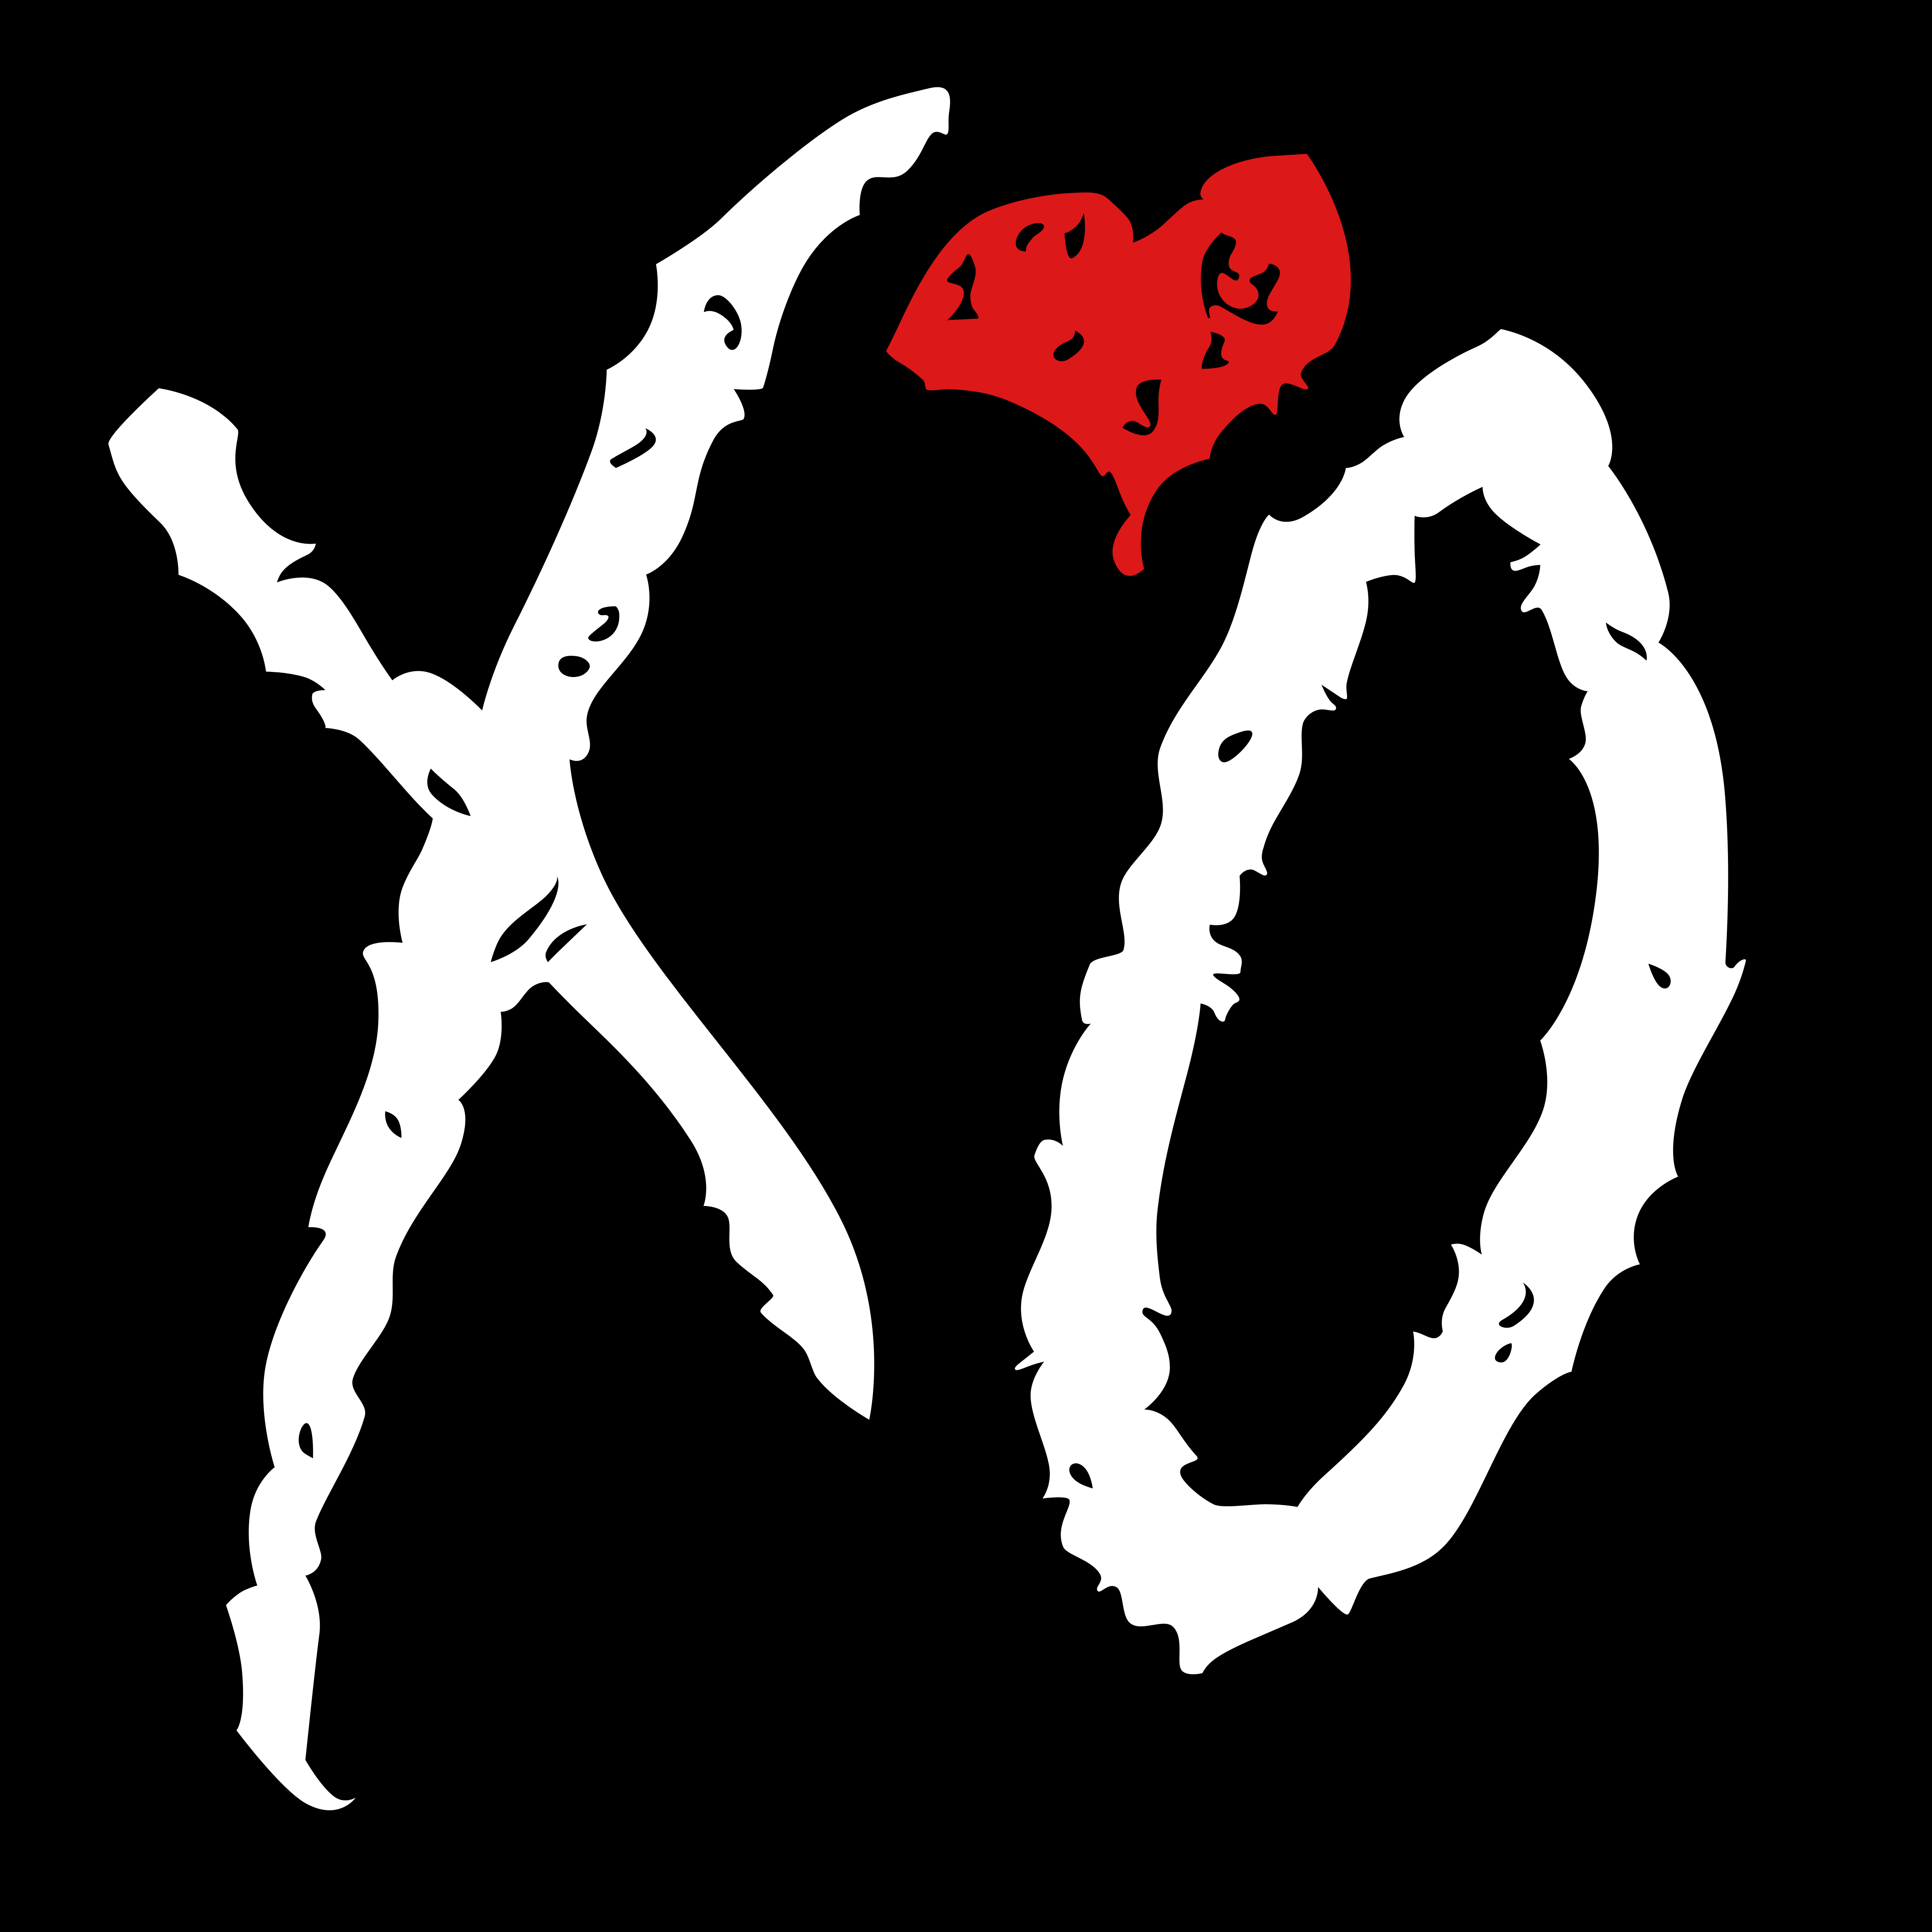 Official Issue Xo Logo - The weeknd xo Logos